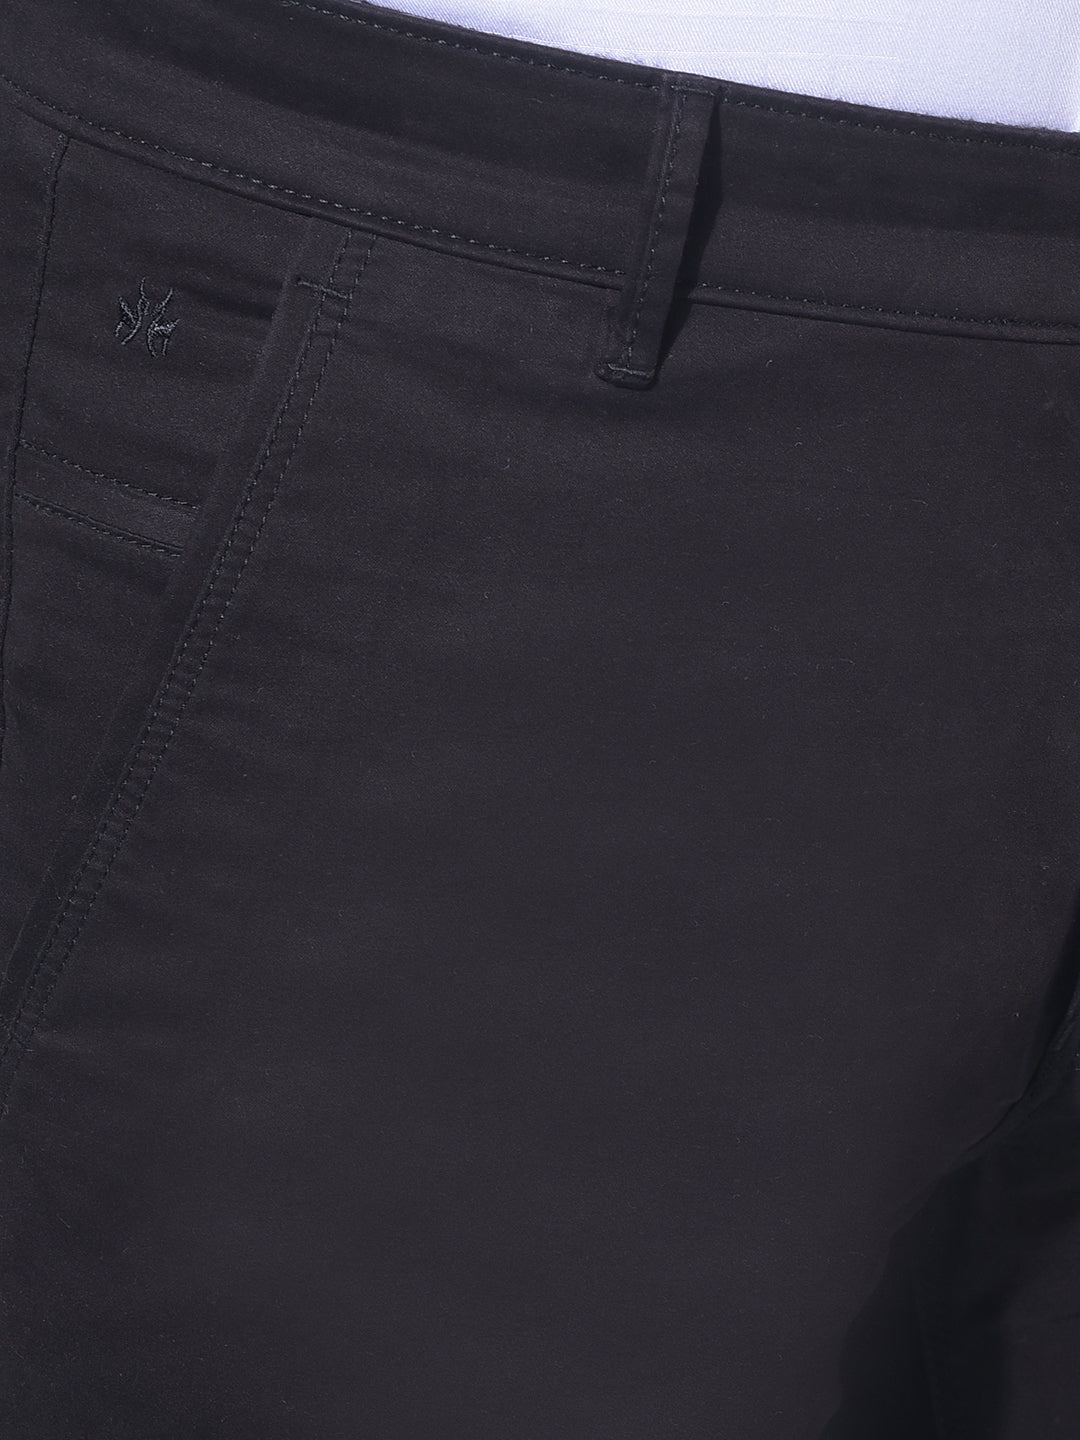 Black Stretchable Trousers-Men Trousers-Crimsoune Club